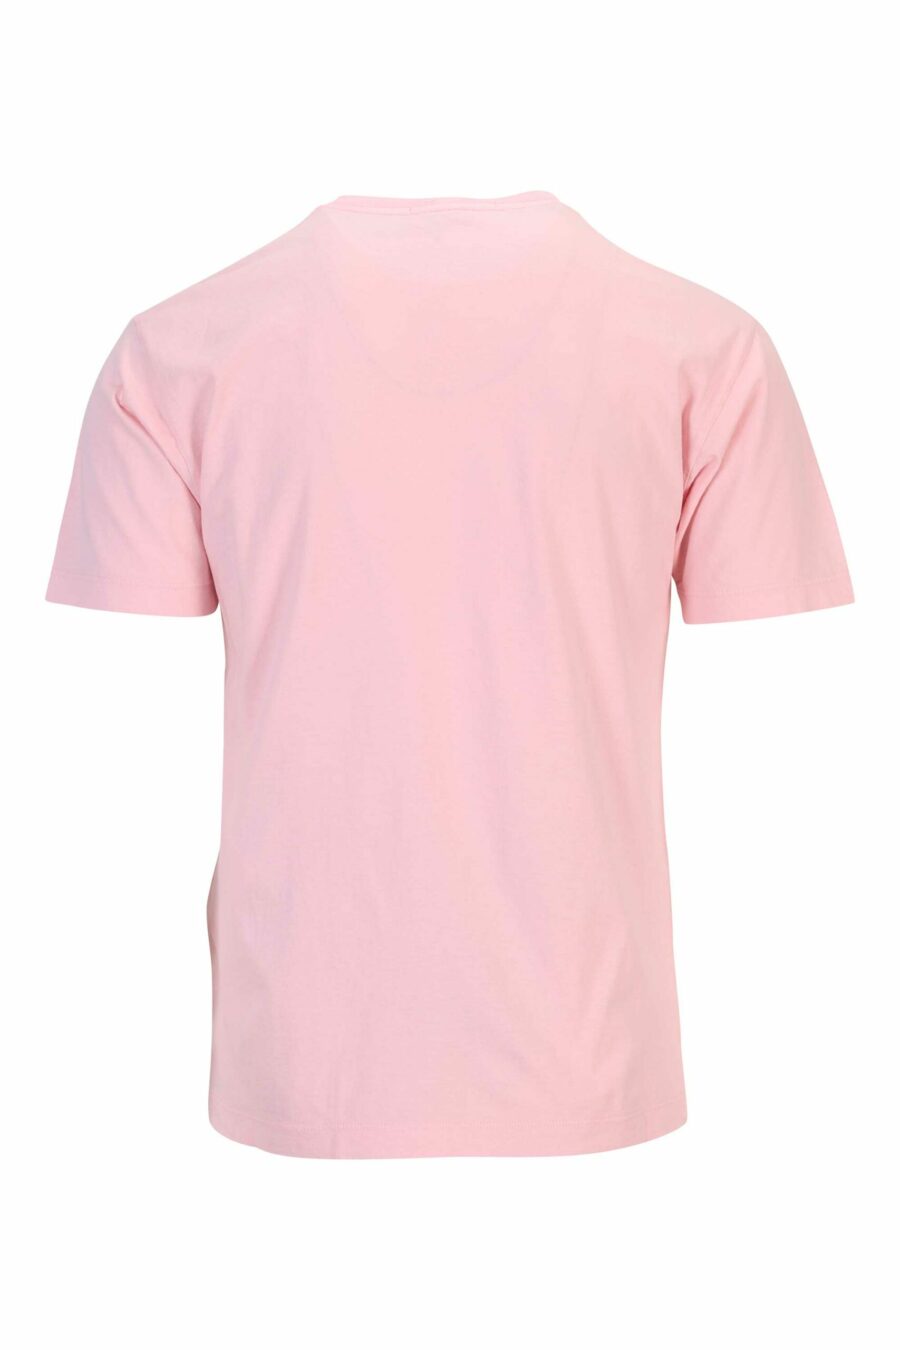 Rosa T-Shirt mit Kompass-Logo-Aufdruck - 8052572903991 1 skaliert